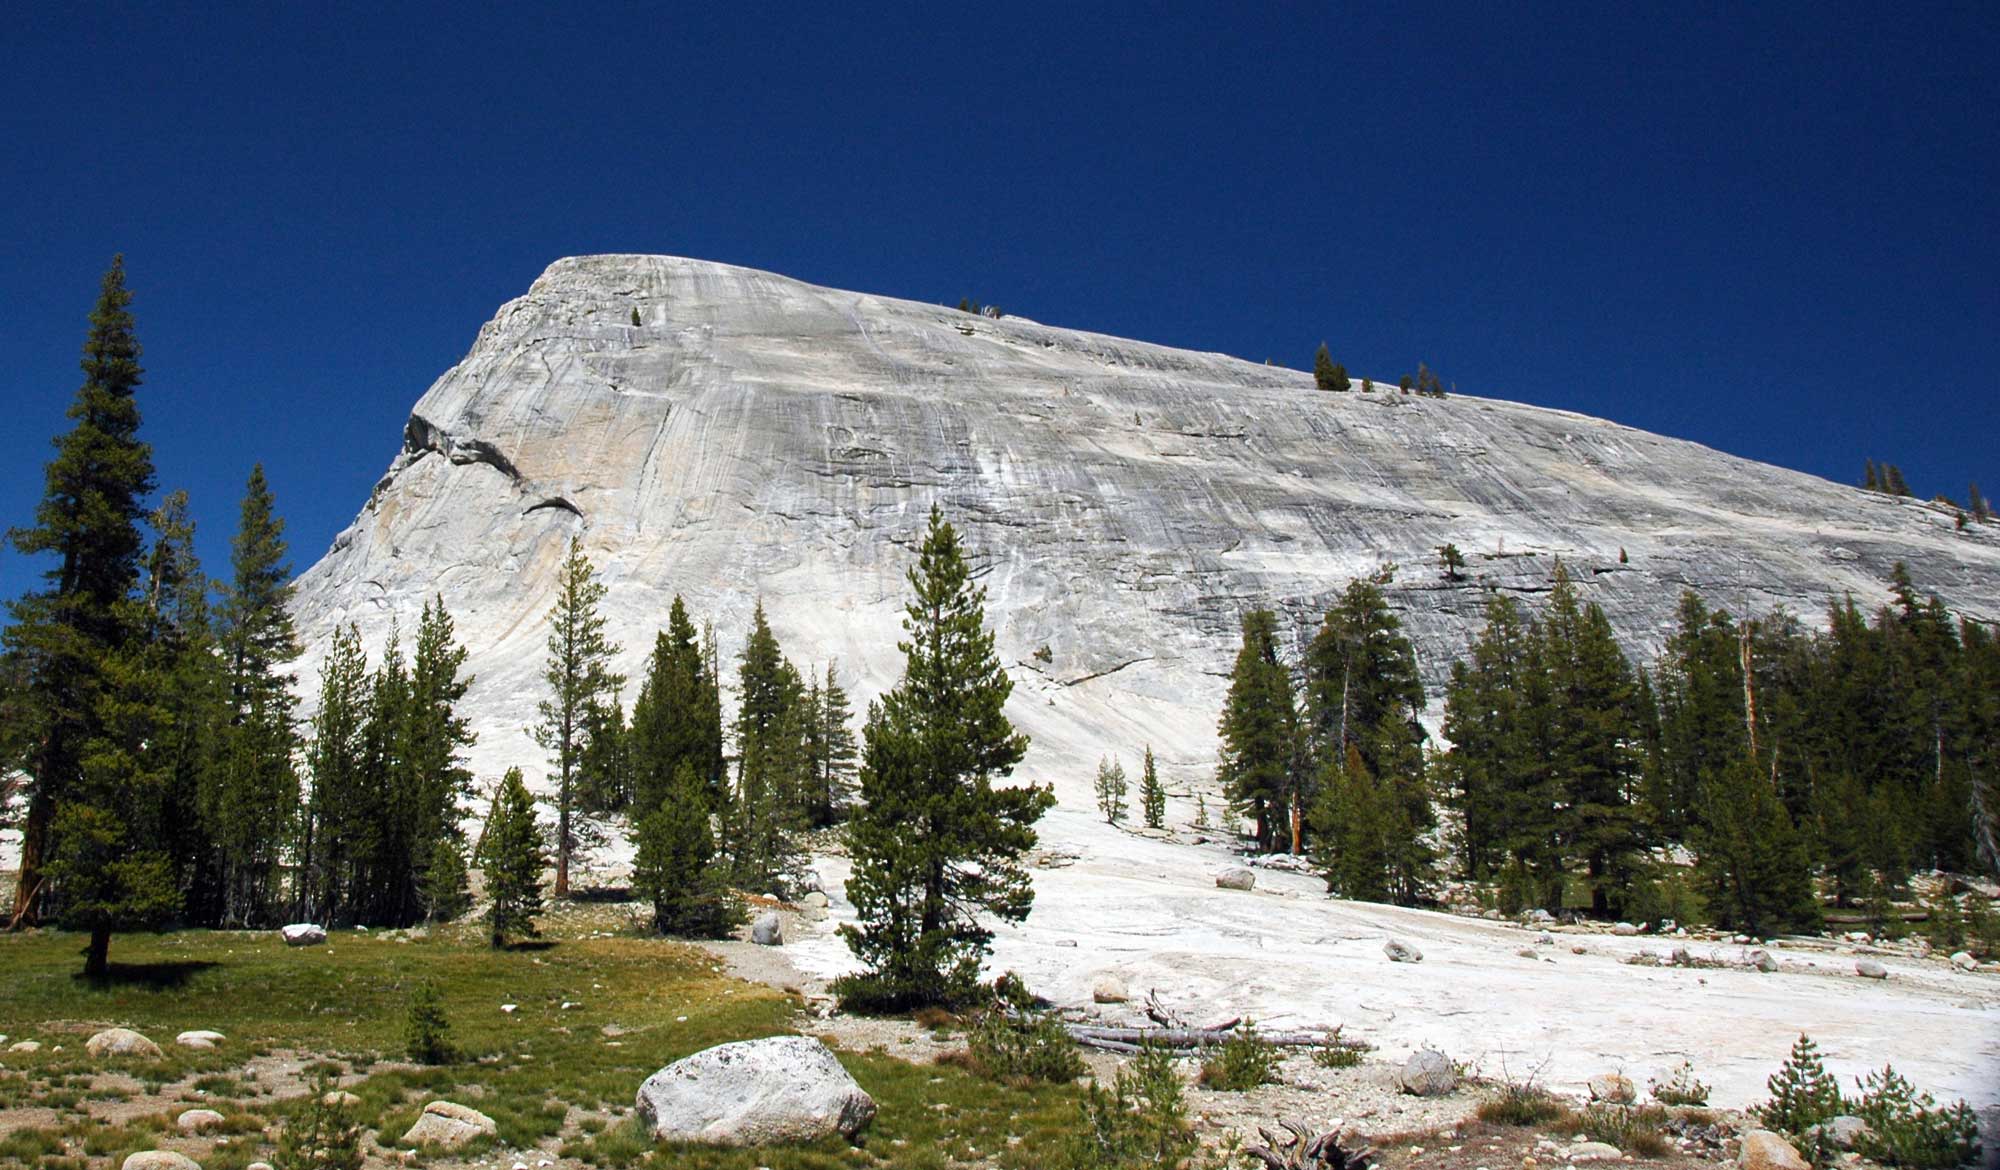 Roche moutonnee, an outcrop of Late Cretaceous granitic rock in Yosemite National Park, California.